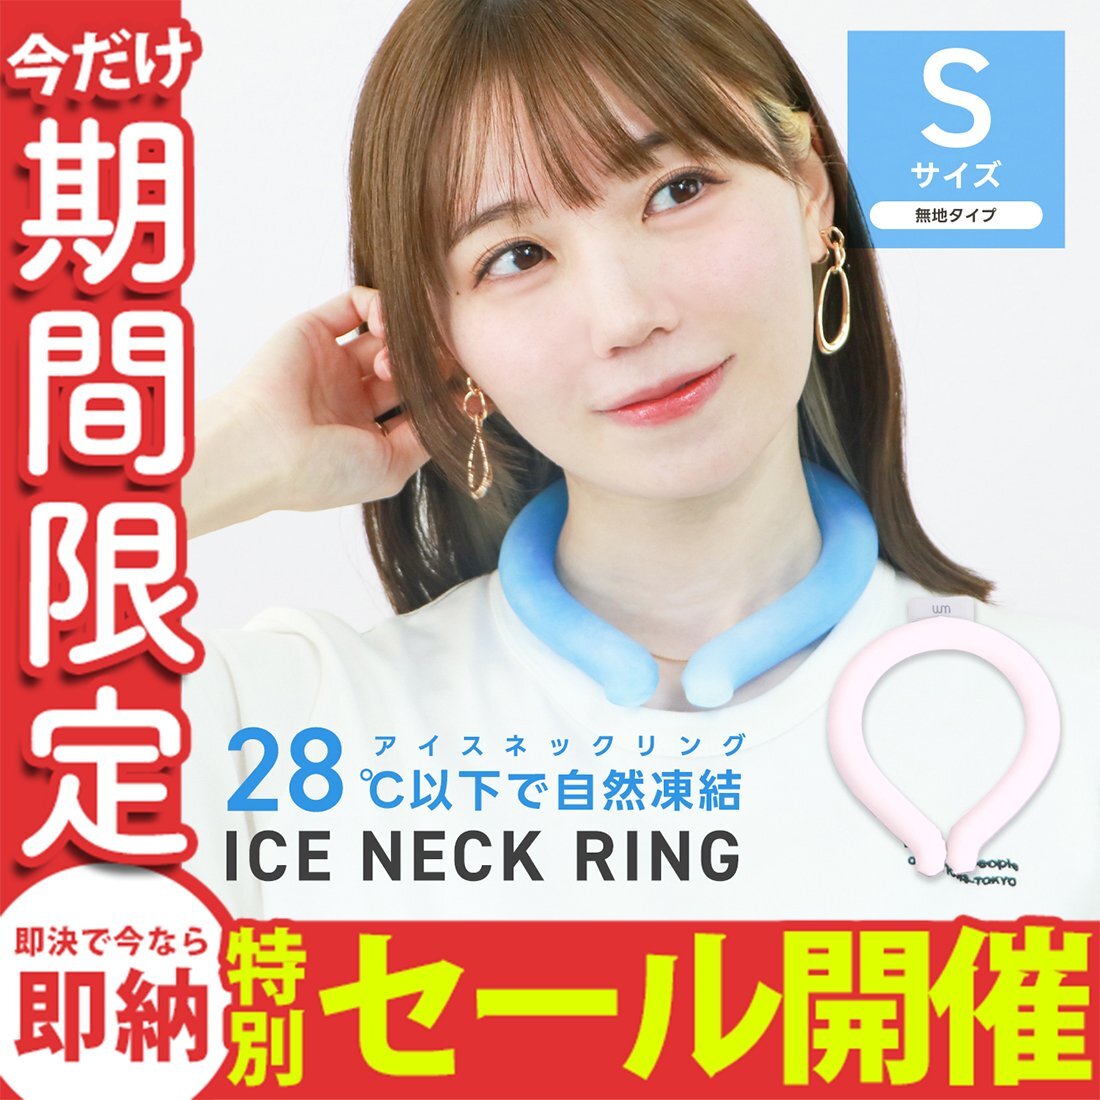 [ limited amount sale ] cool ring S size neck cooler I sling neck ... middle . cold sensation ring cool neck nature ..28*C pink 